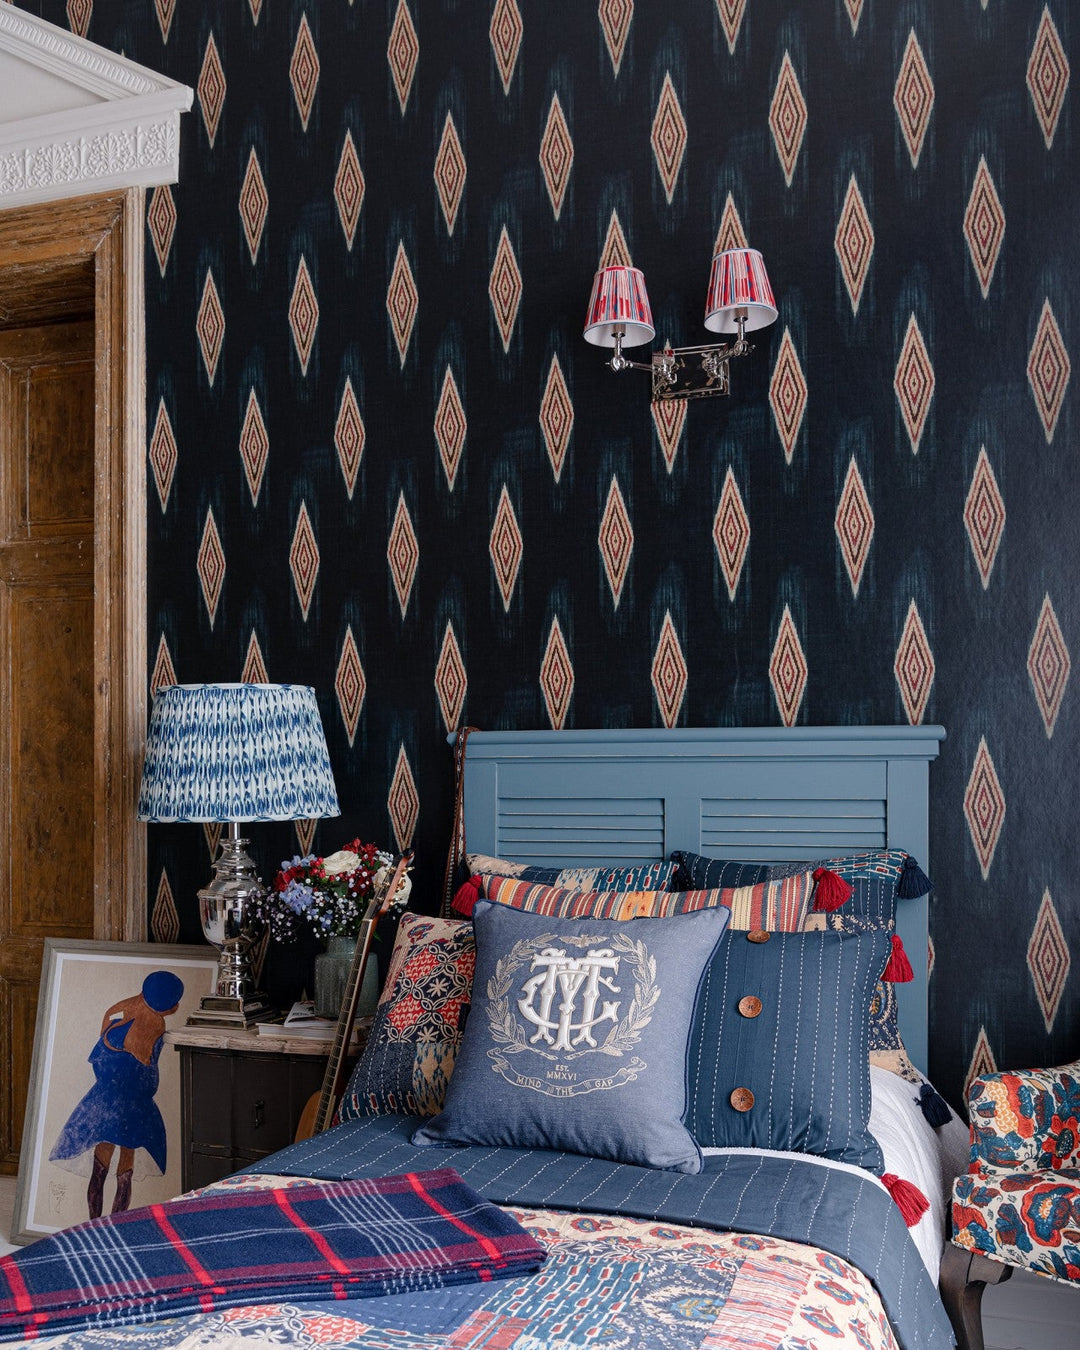 MAIYSHA Indigo Bedroom Wallpaper Image, Mind the gap wall covering